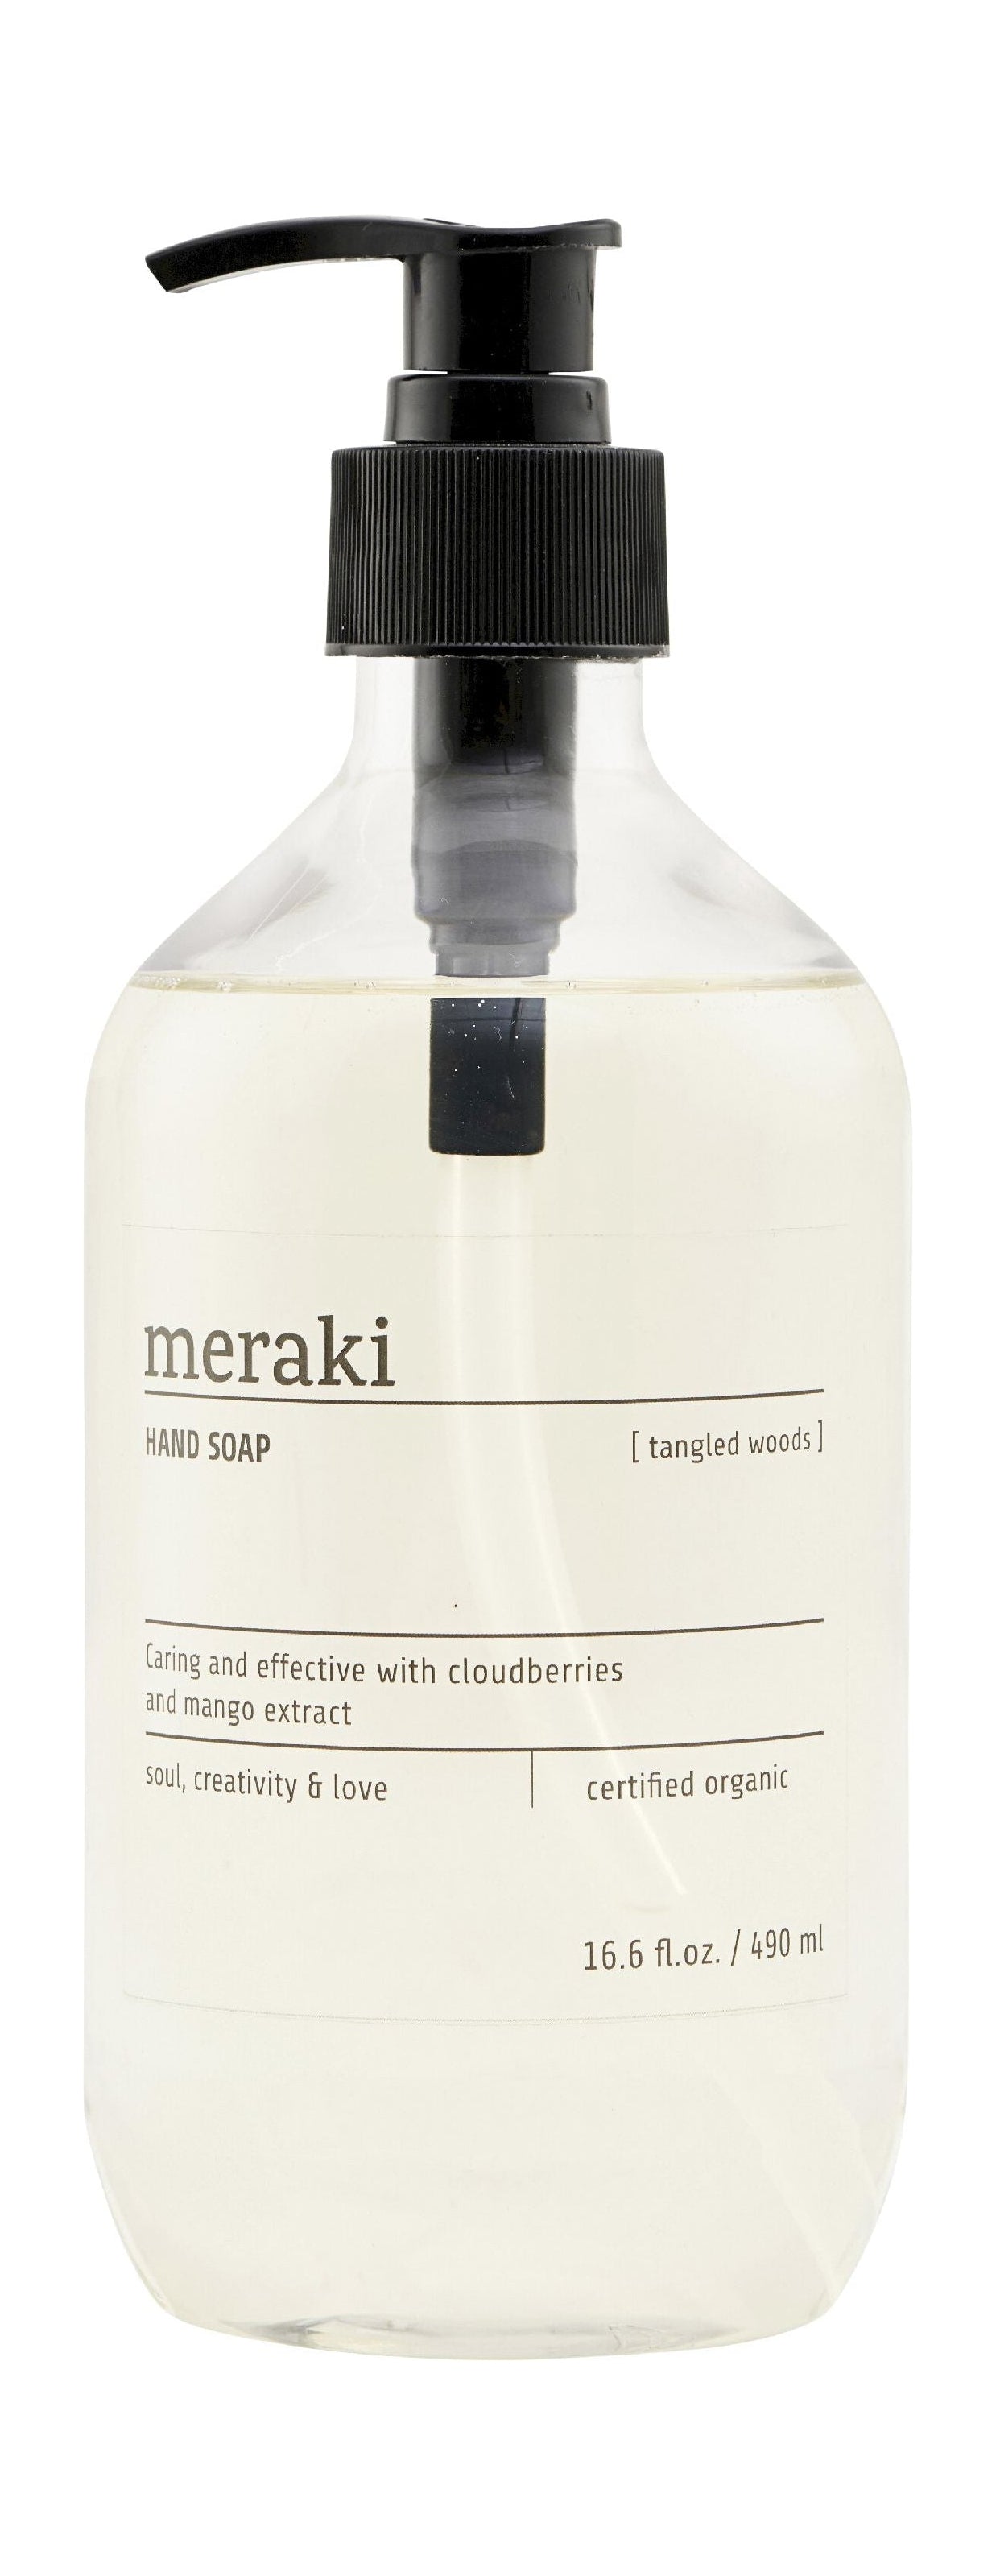 Jabón de mano de Meraki 490 ml, maderas enredadas